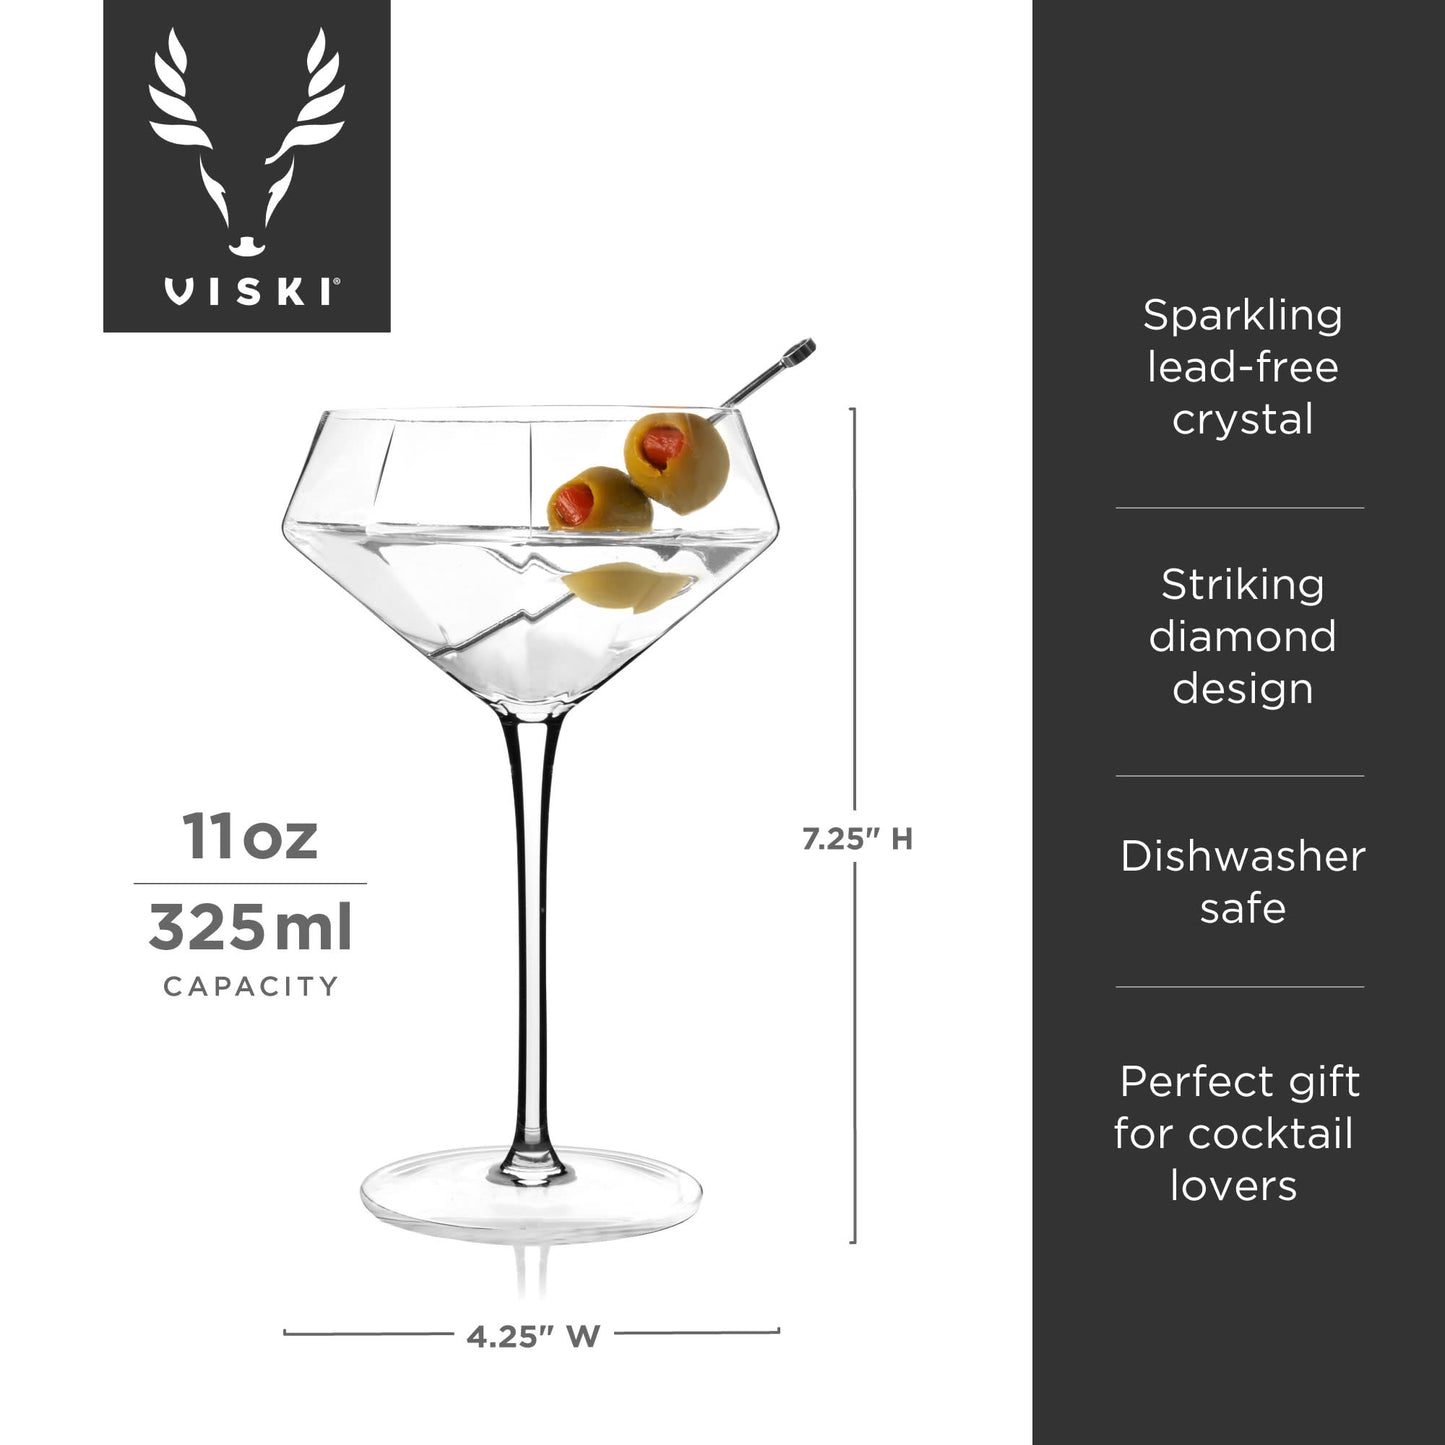 Seneca Diamond Martini Glasses